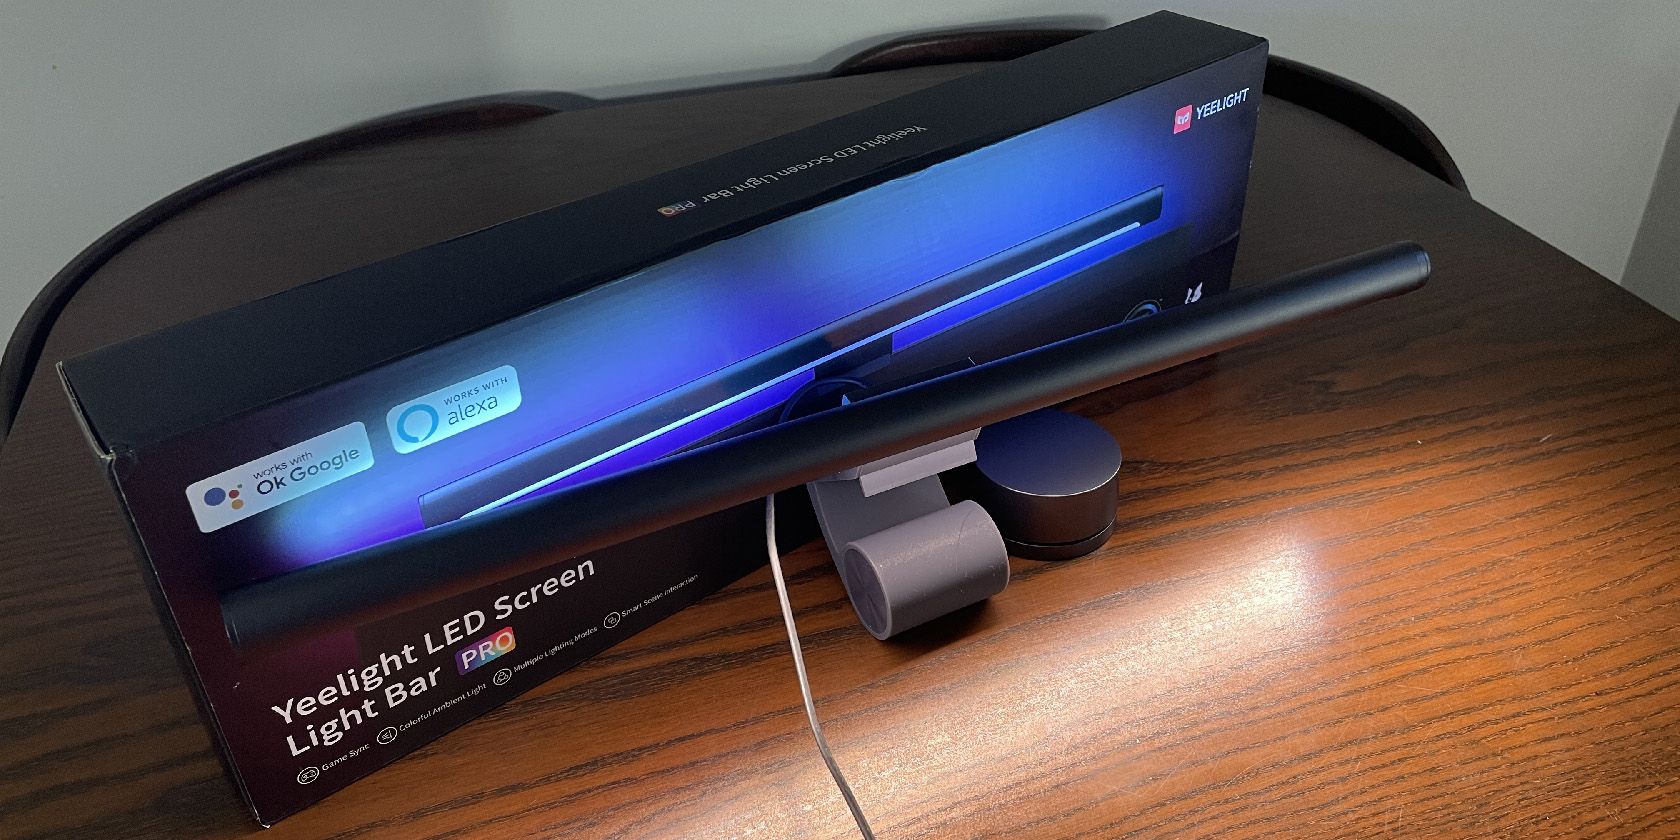 Yeelight LED Screen Light Bar Pro on Table Turned On